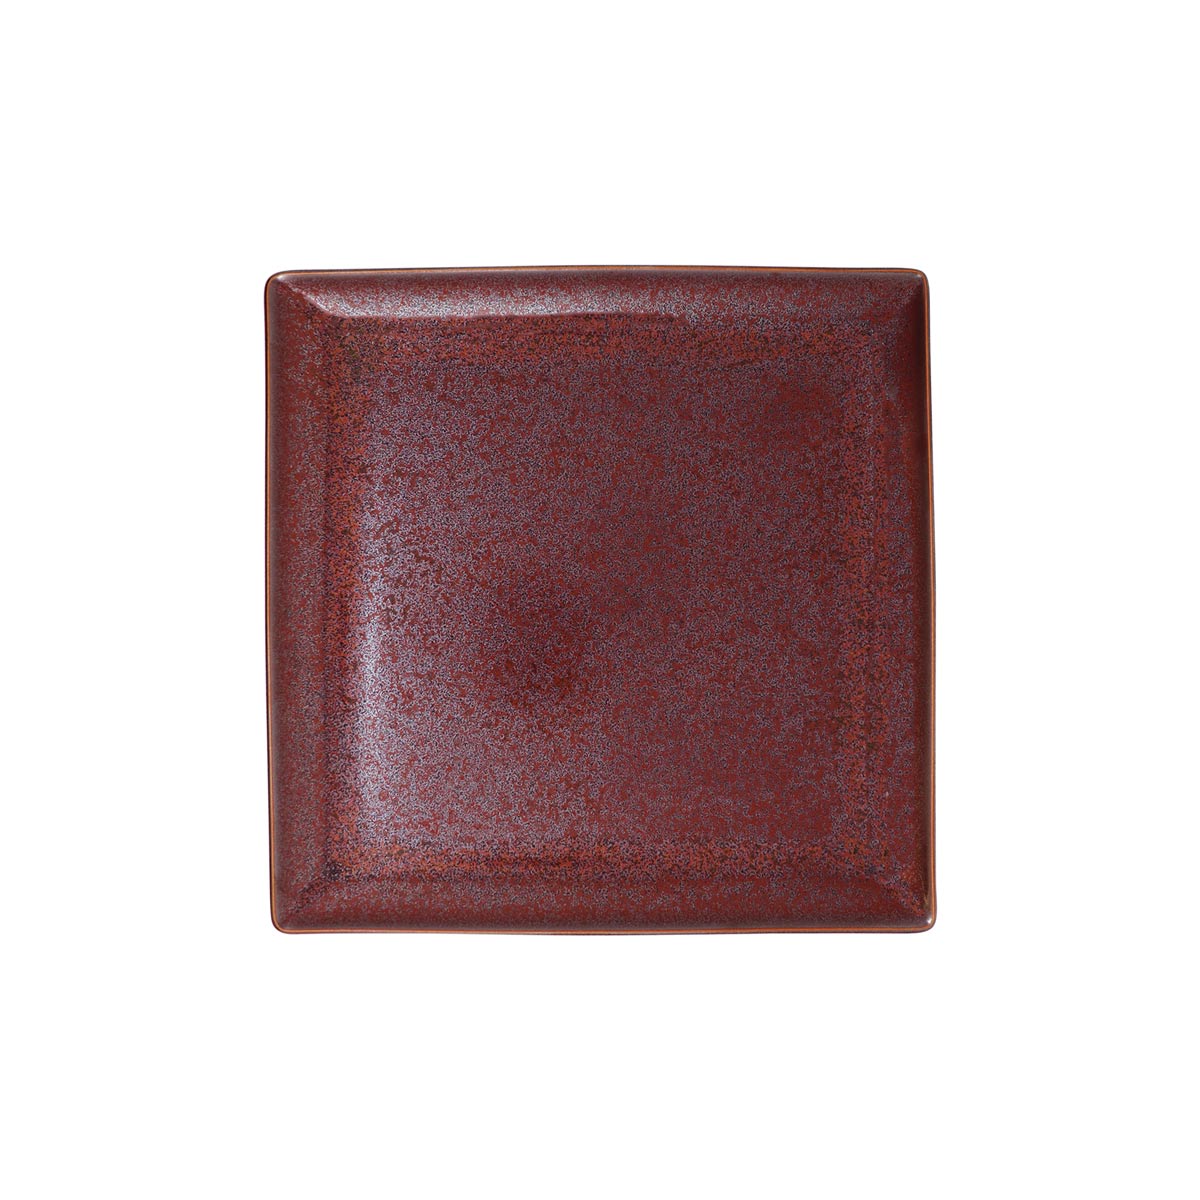 RED GRANITE - Square plate 24 cm                                